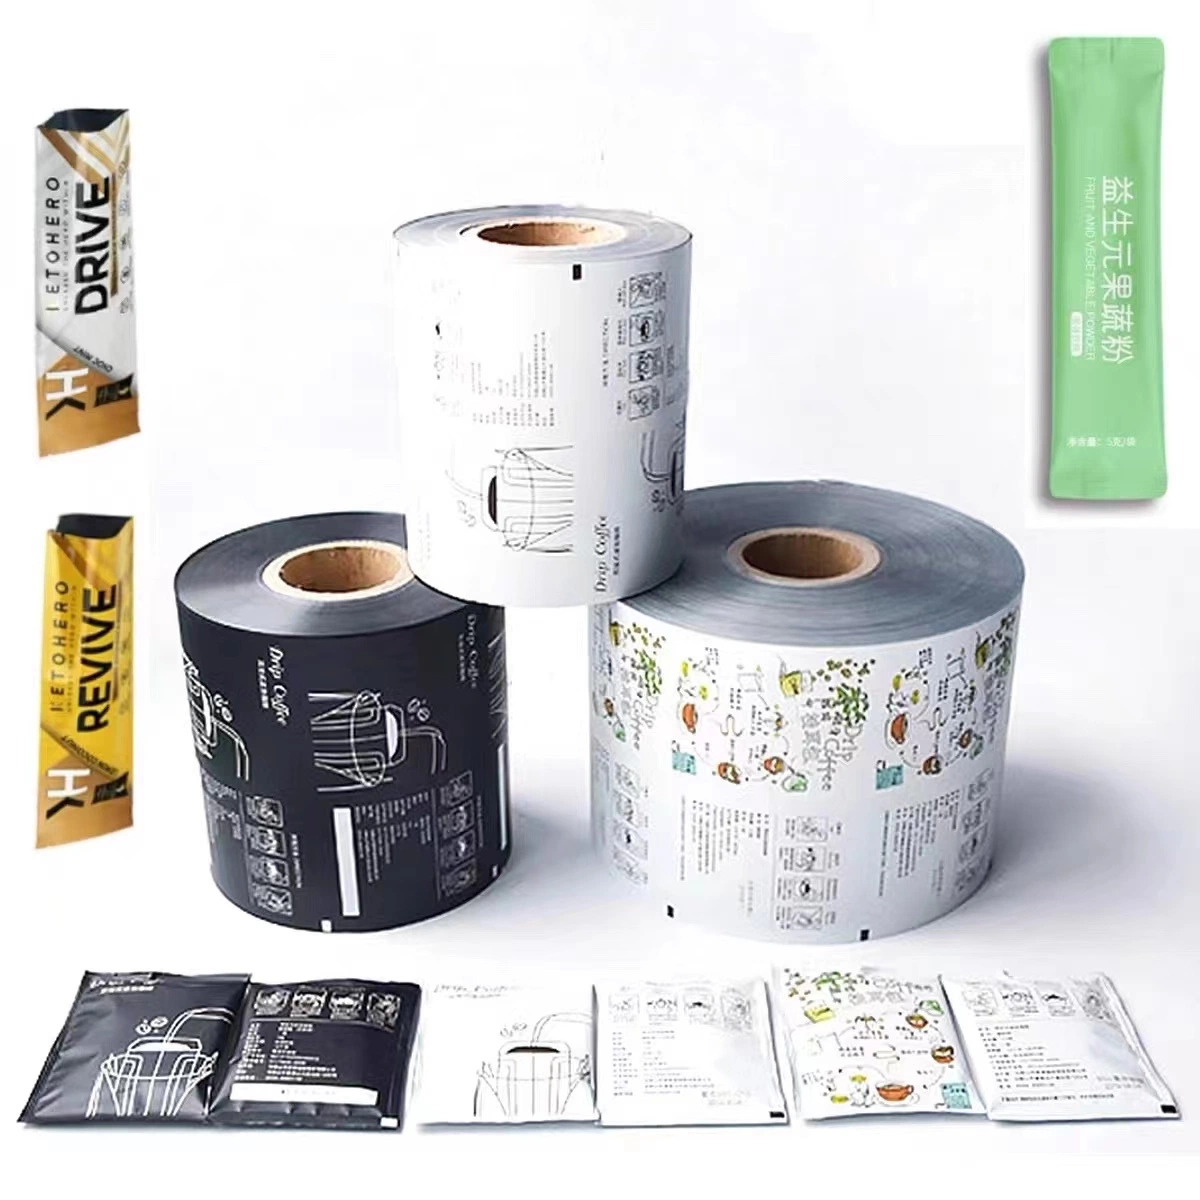 Plastic BOPP Film Pharmaceutical Packaging Roll Composited Film Bag Pouch